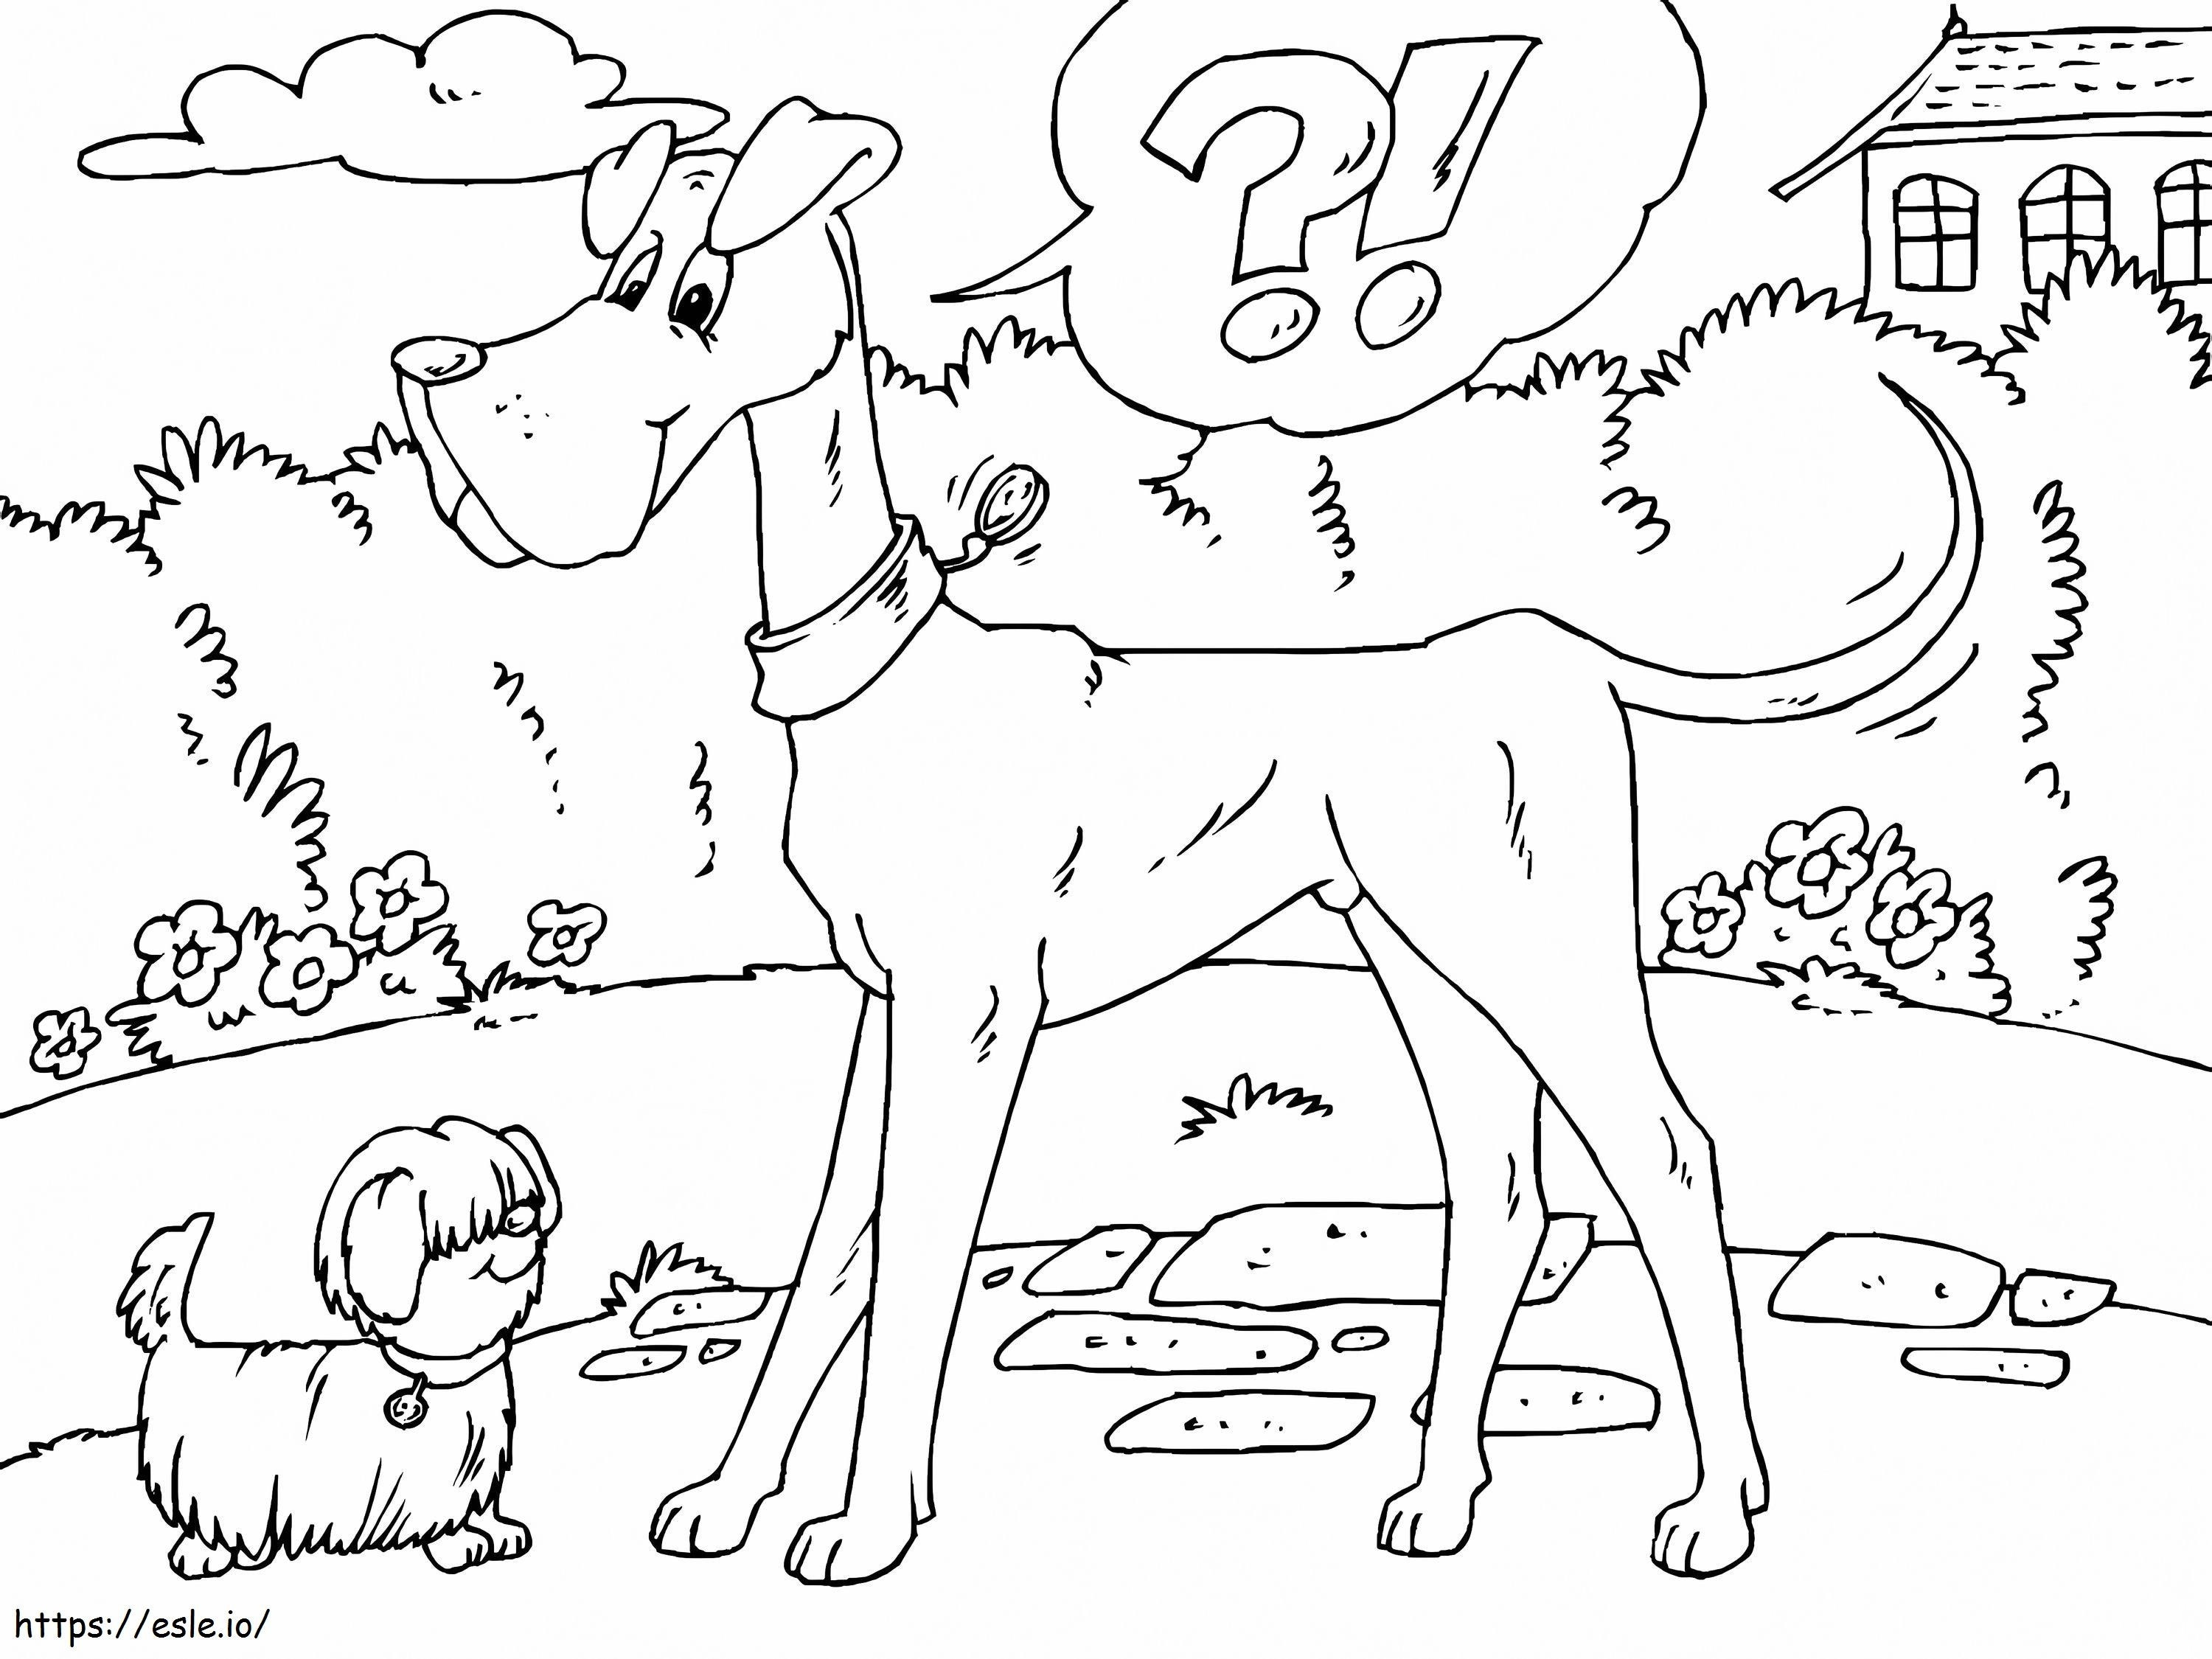  Bigdogsmalldoga4 para colorir